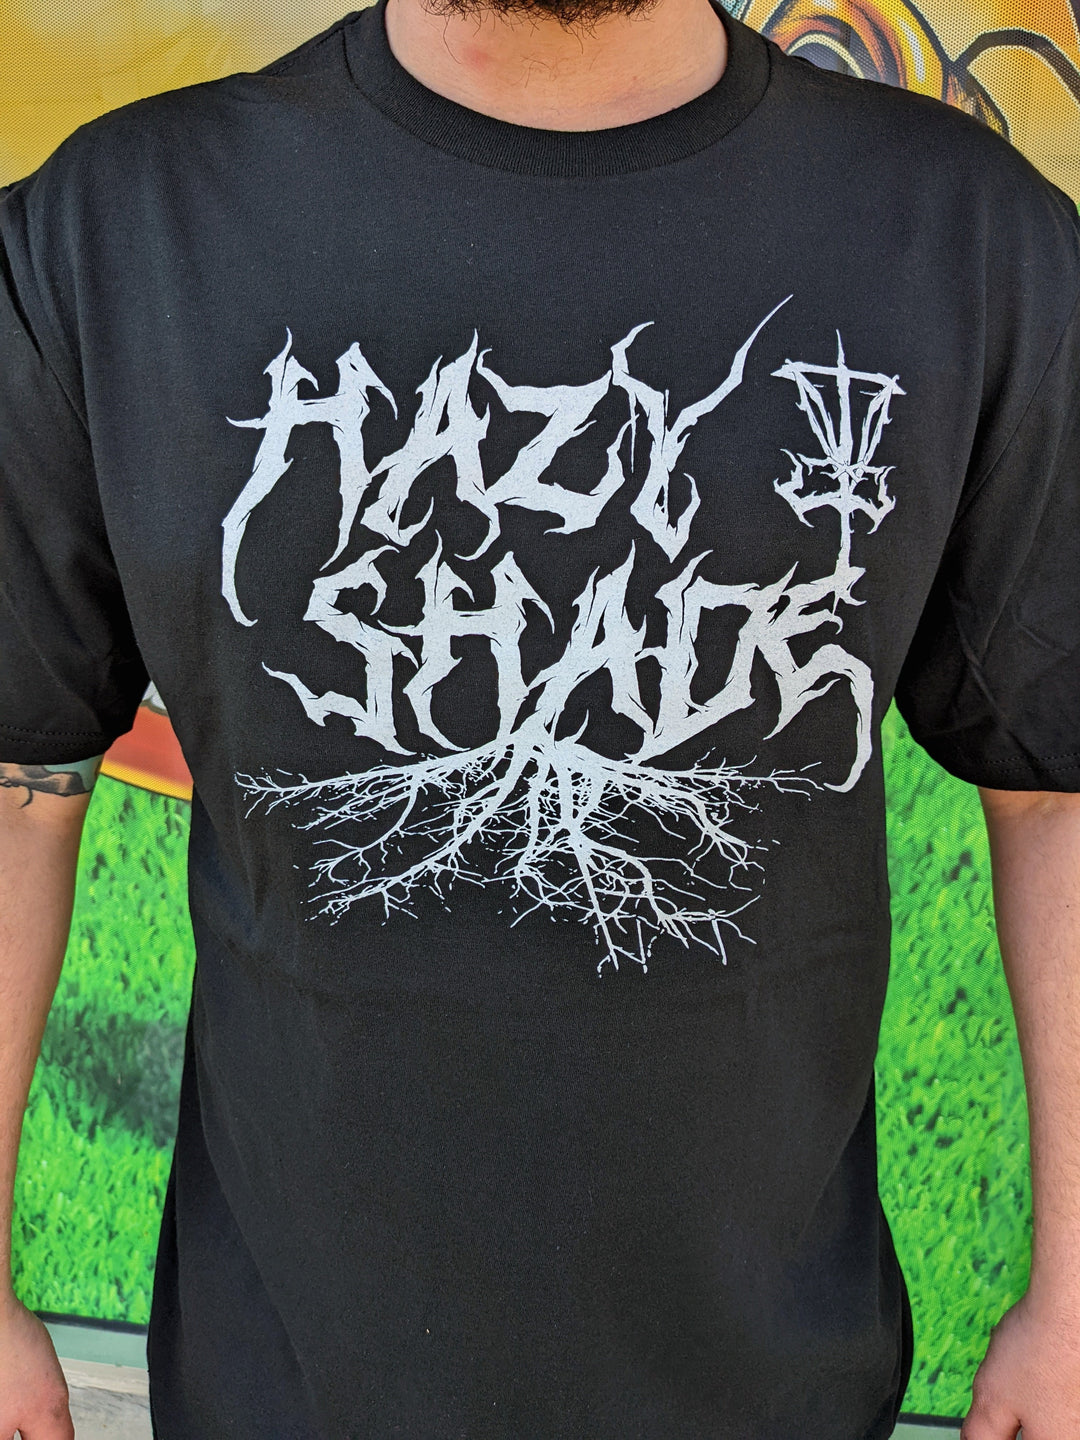 Hazy Shade Metal Tee Shirt Large